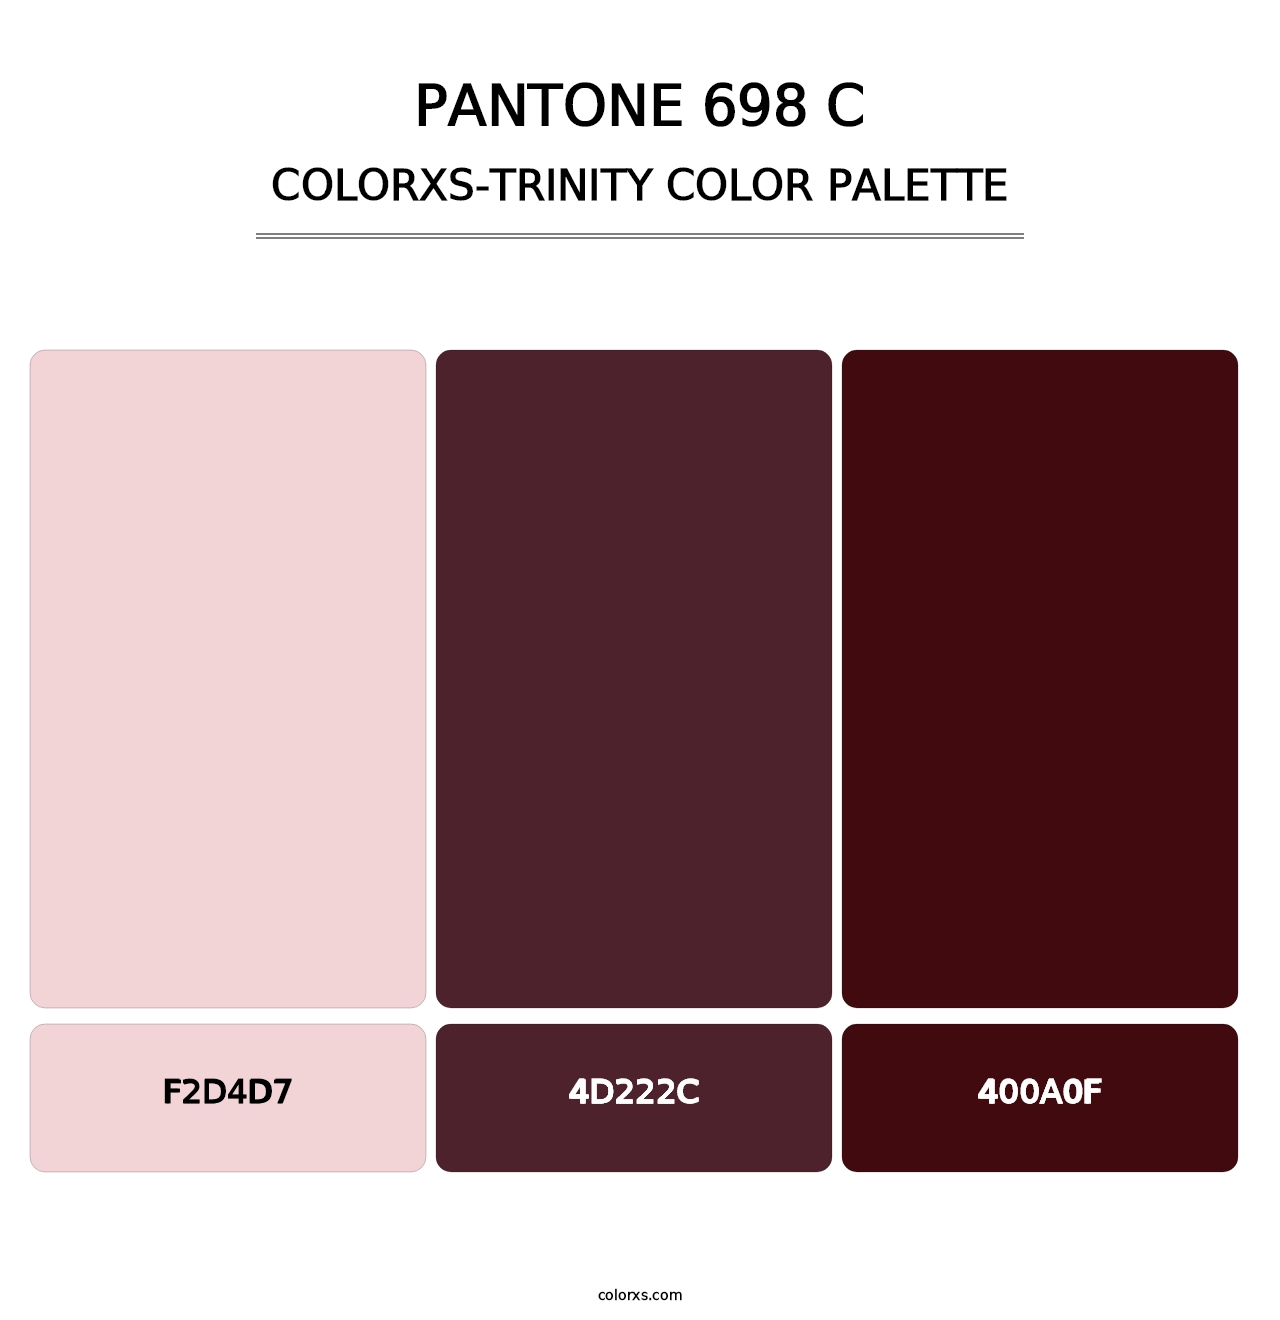 PANTONE 698 C - Colorxs Trinity Palette